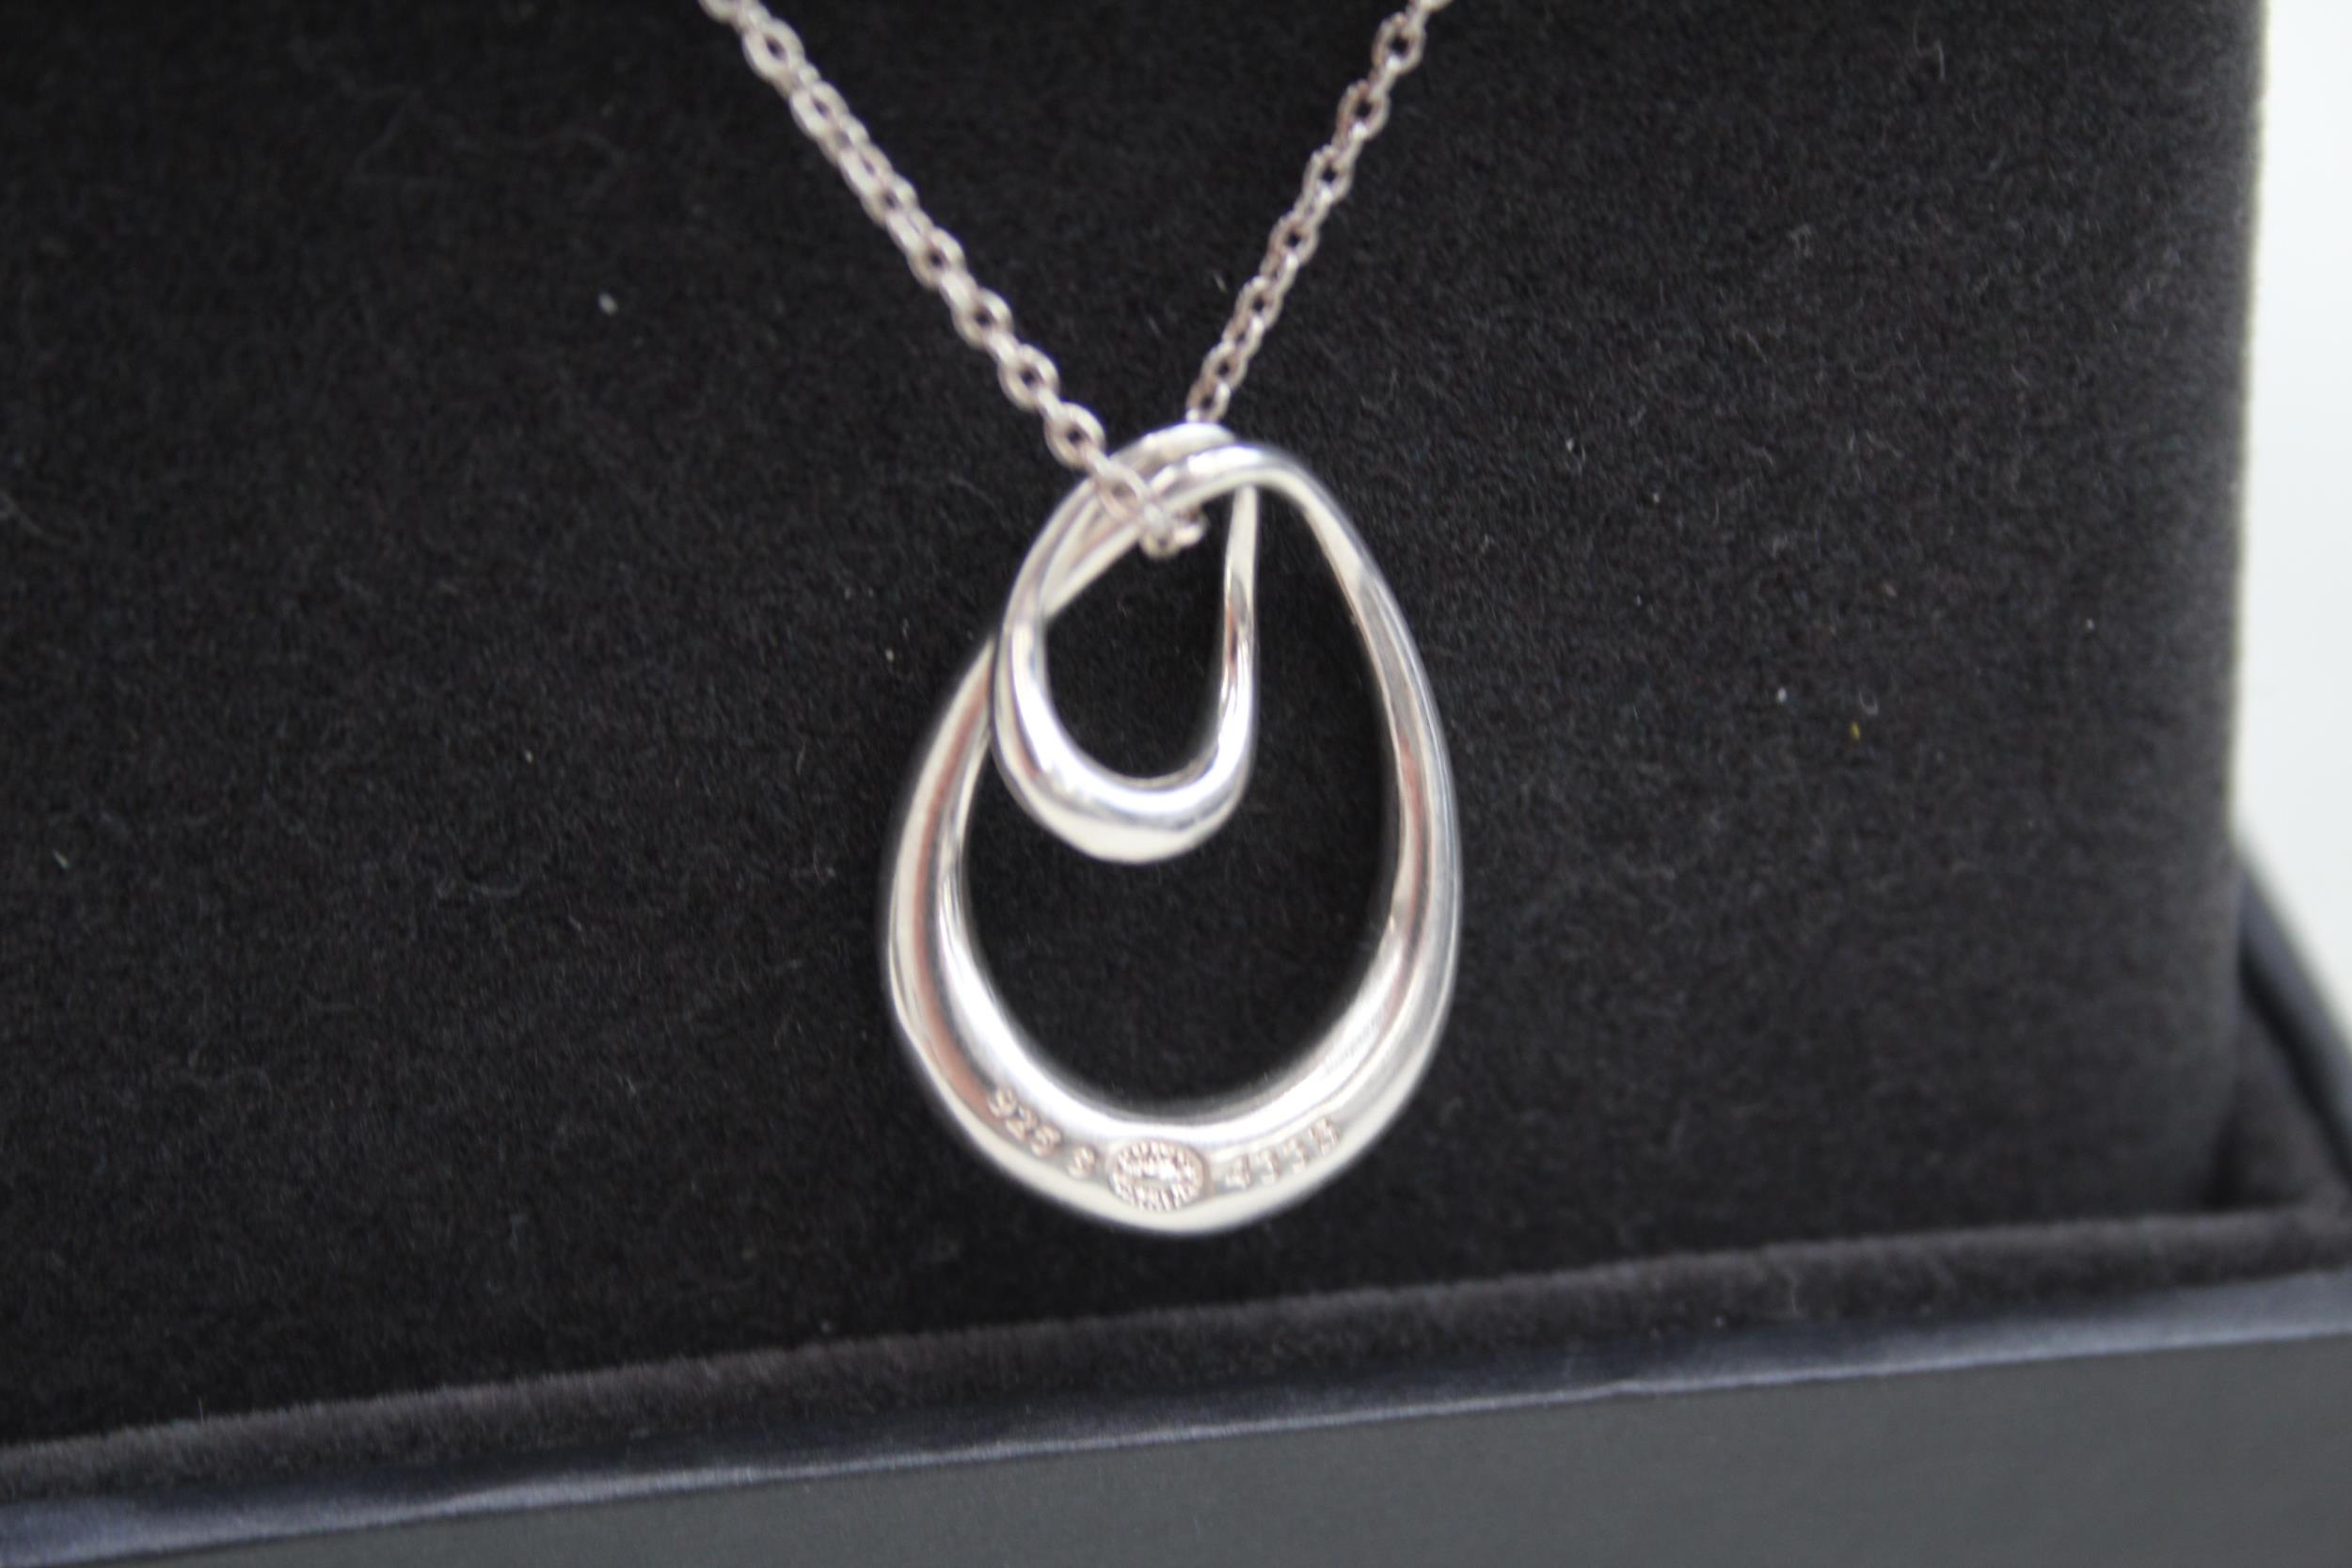 Georg Jensen sterling silver Offspring pendant necklace (6g) - Image 4 of 5